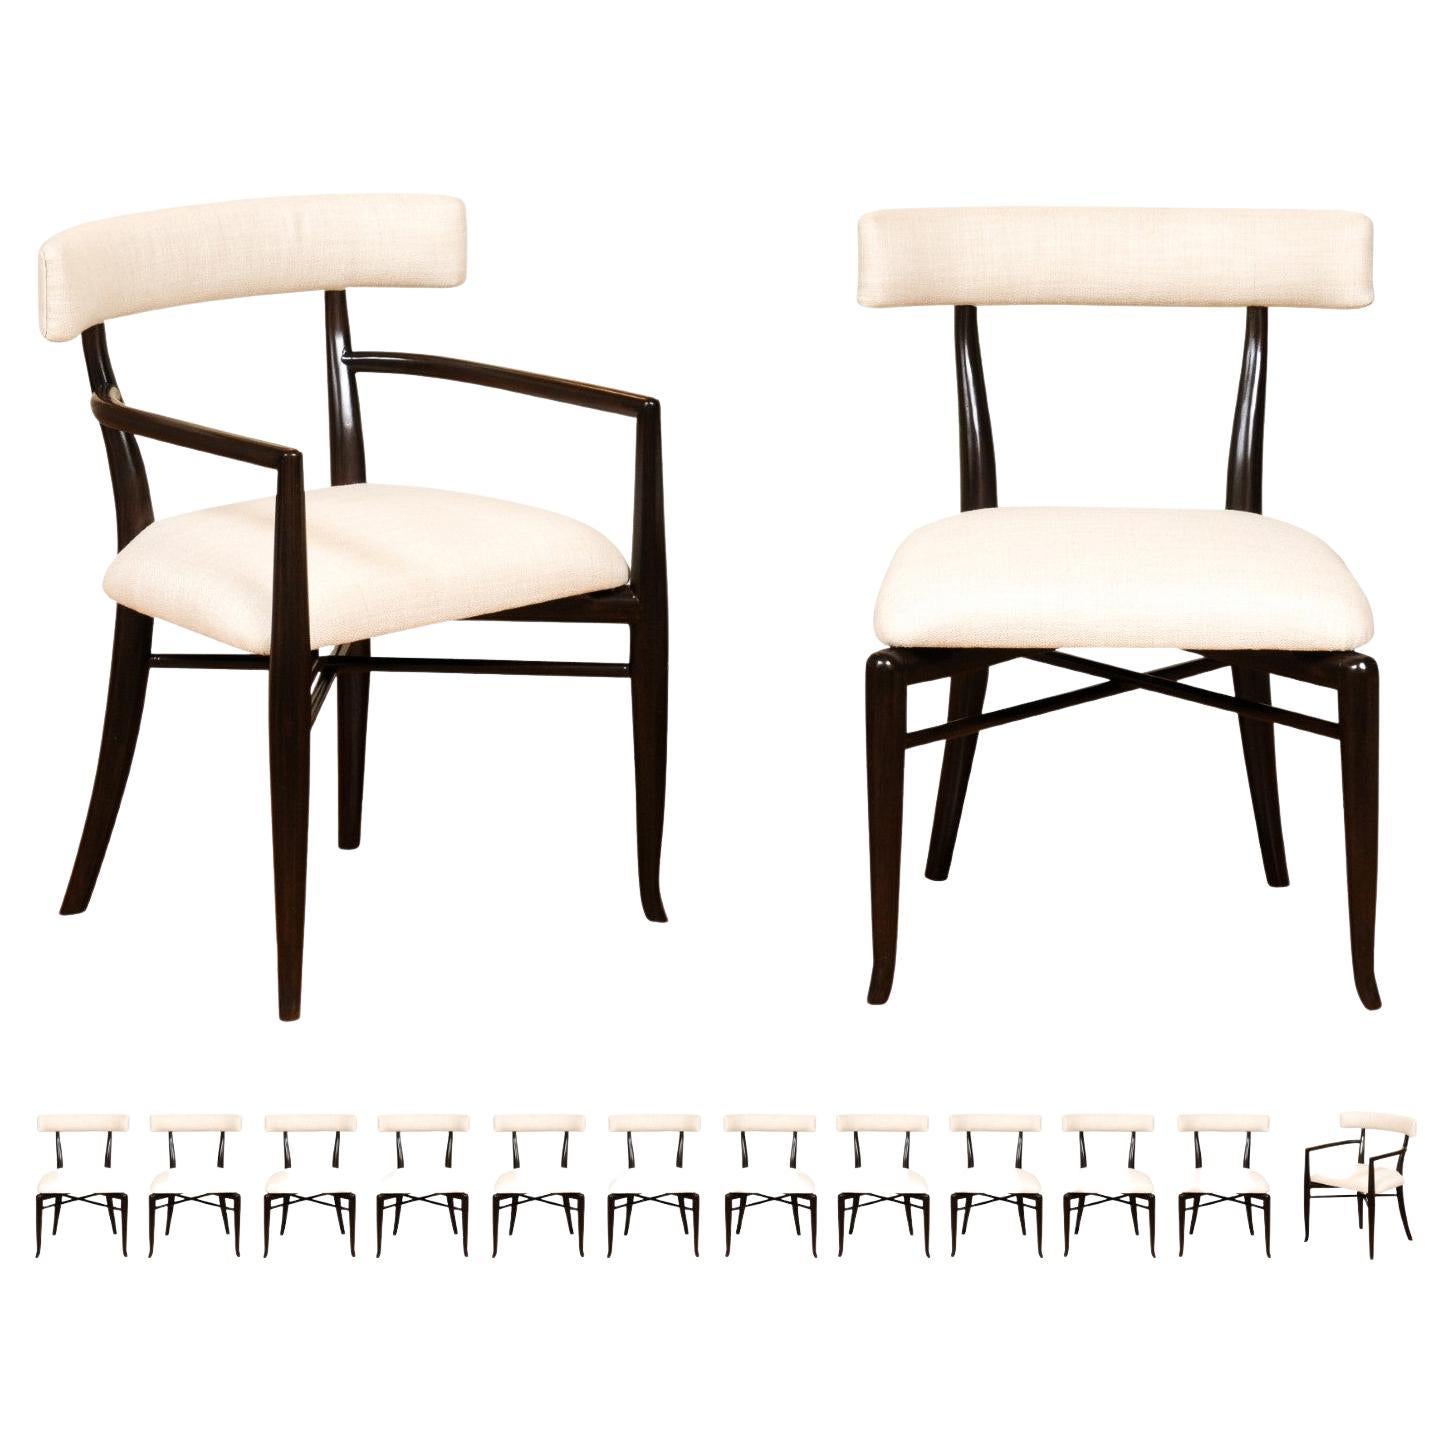 Breathtaking Restored Set of 14 of Klismos Dining Chairs by Robsjohn-Gibbings For Sale